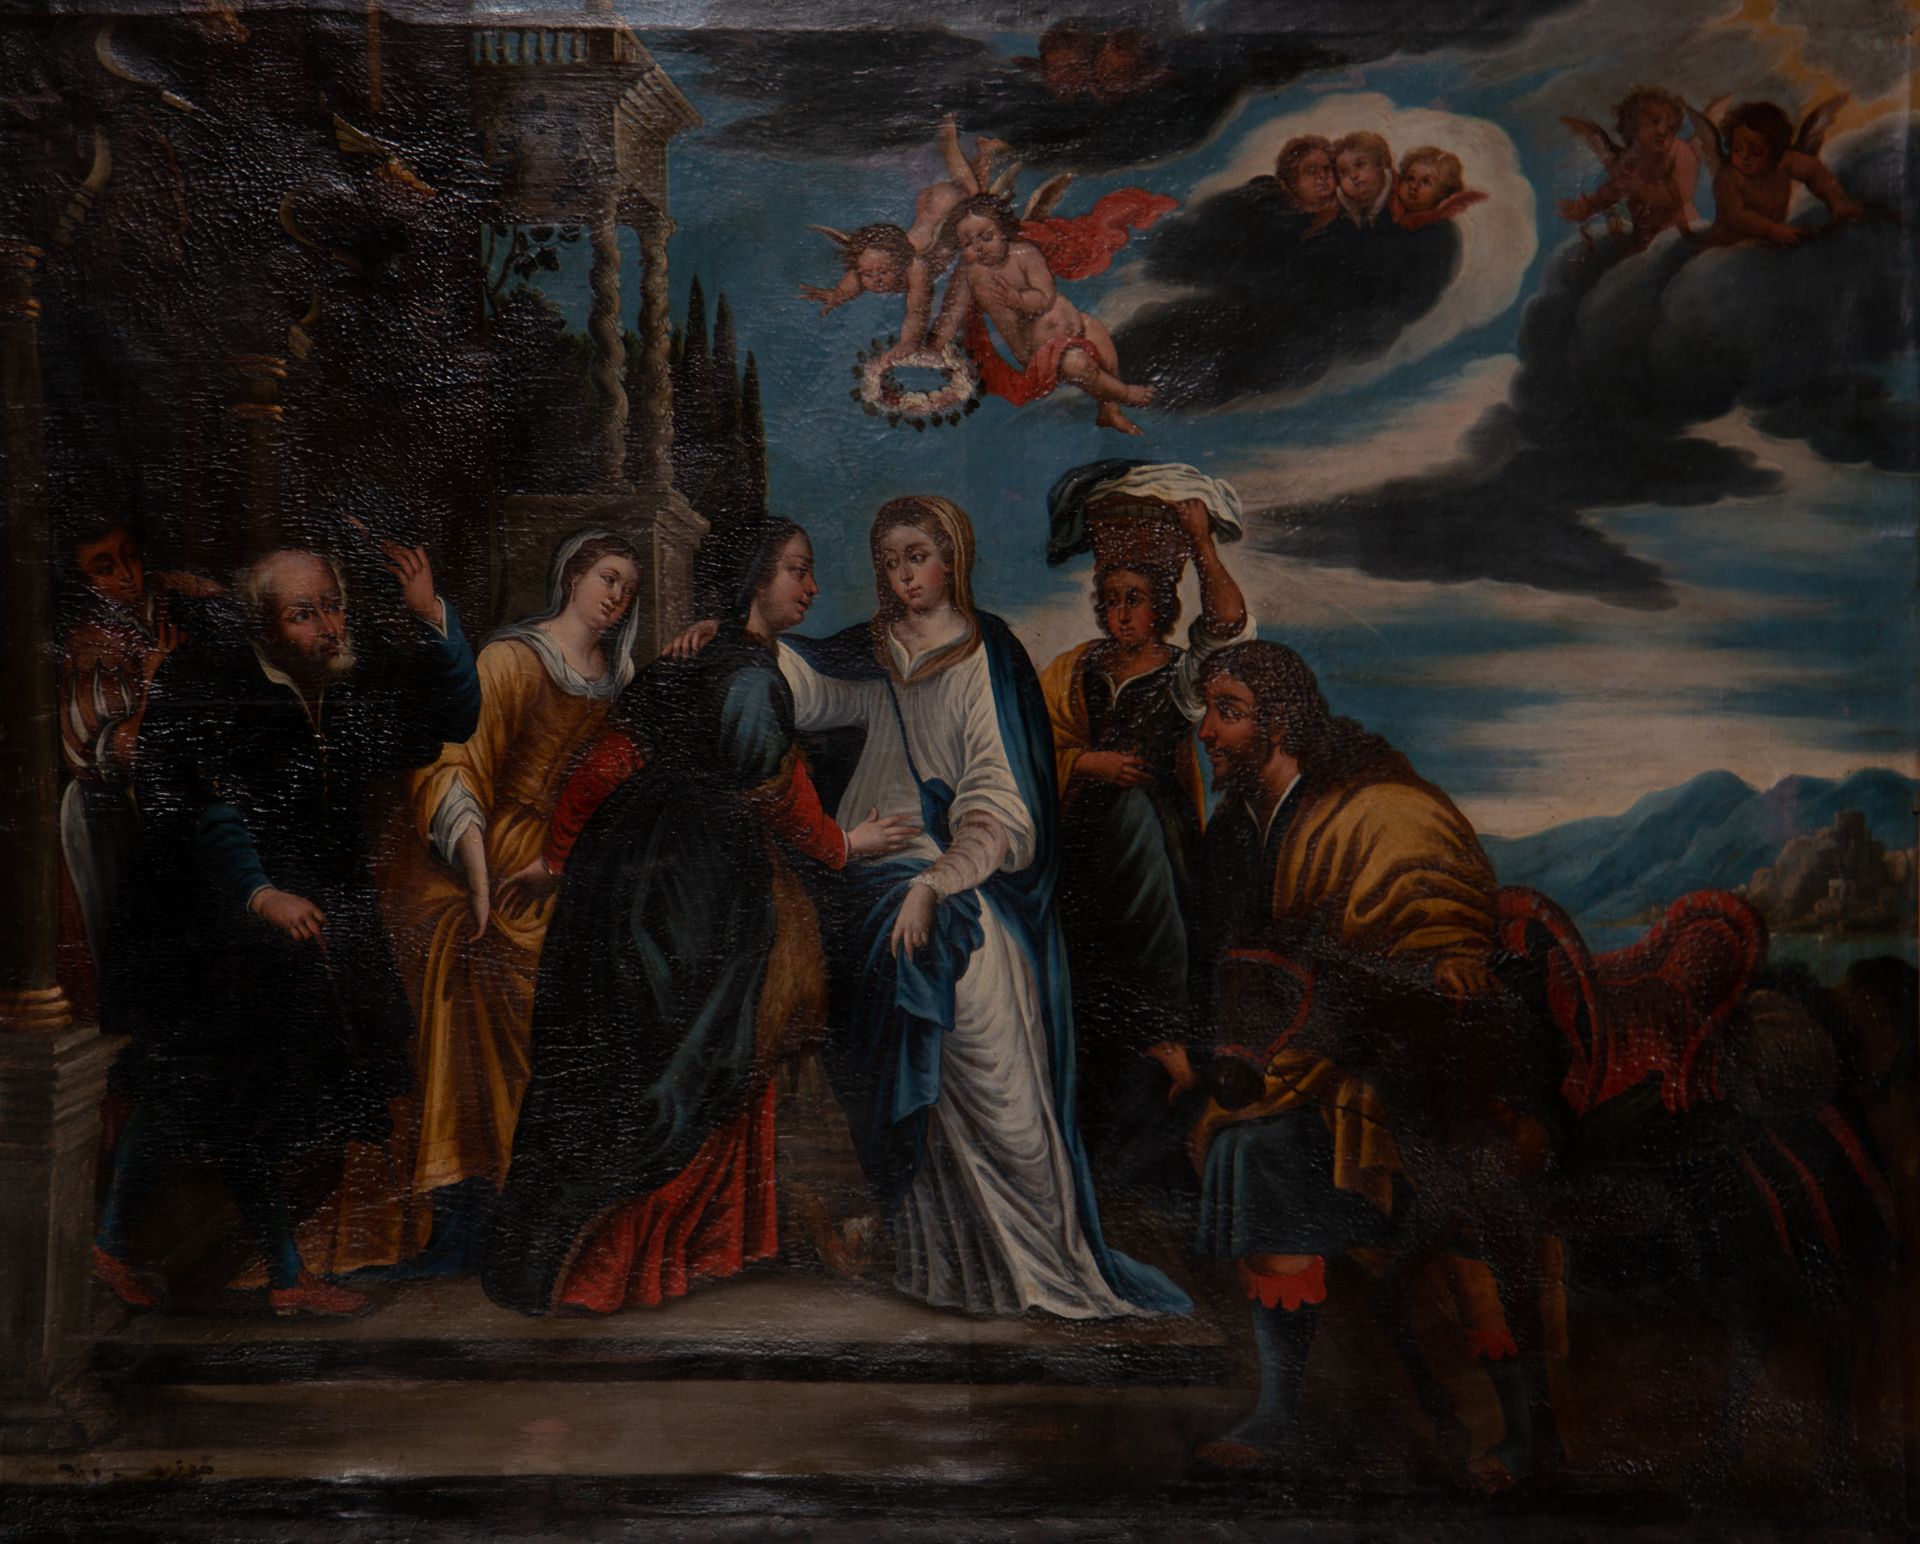 Coronation of the Virgin before Saint Anne and Saint Joachim, 17th century Spanish school